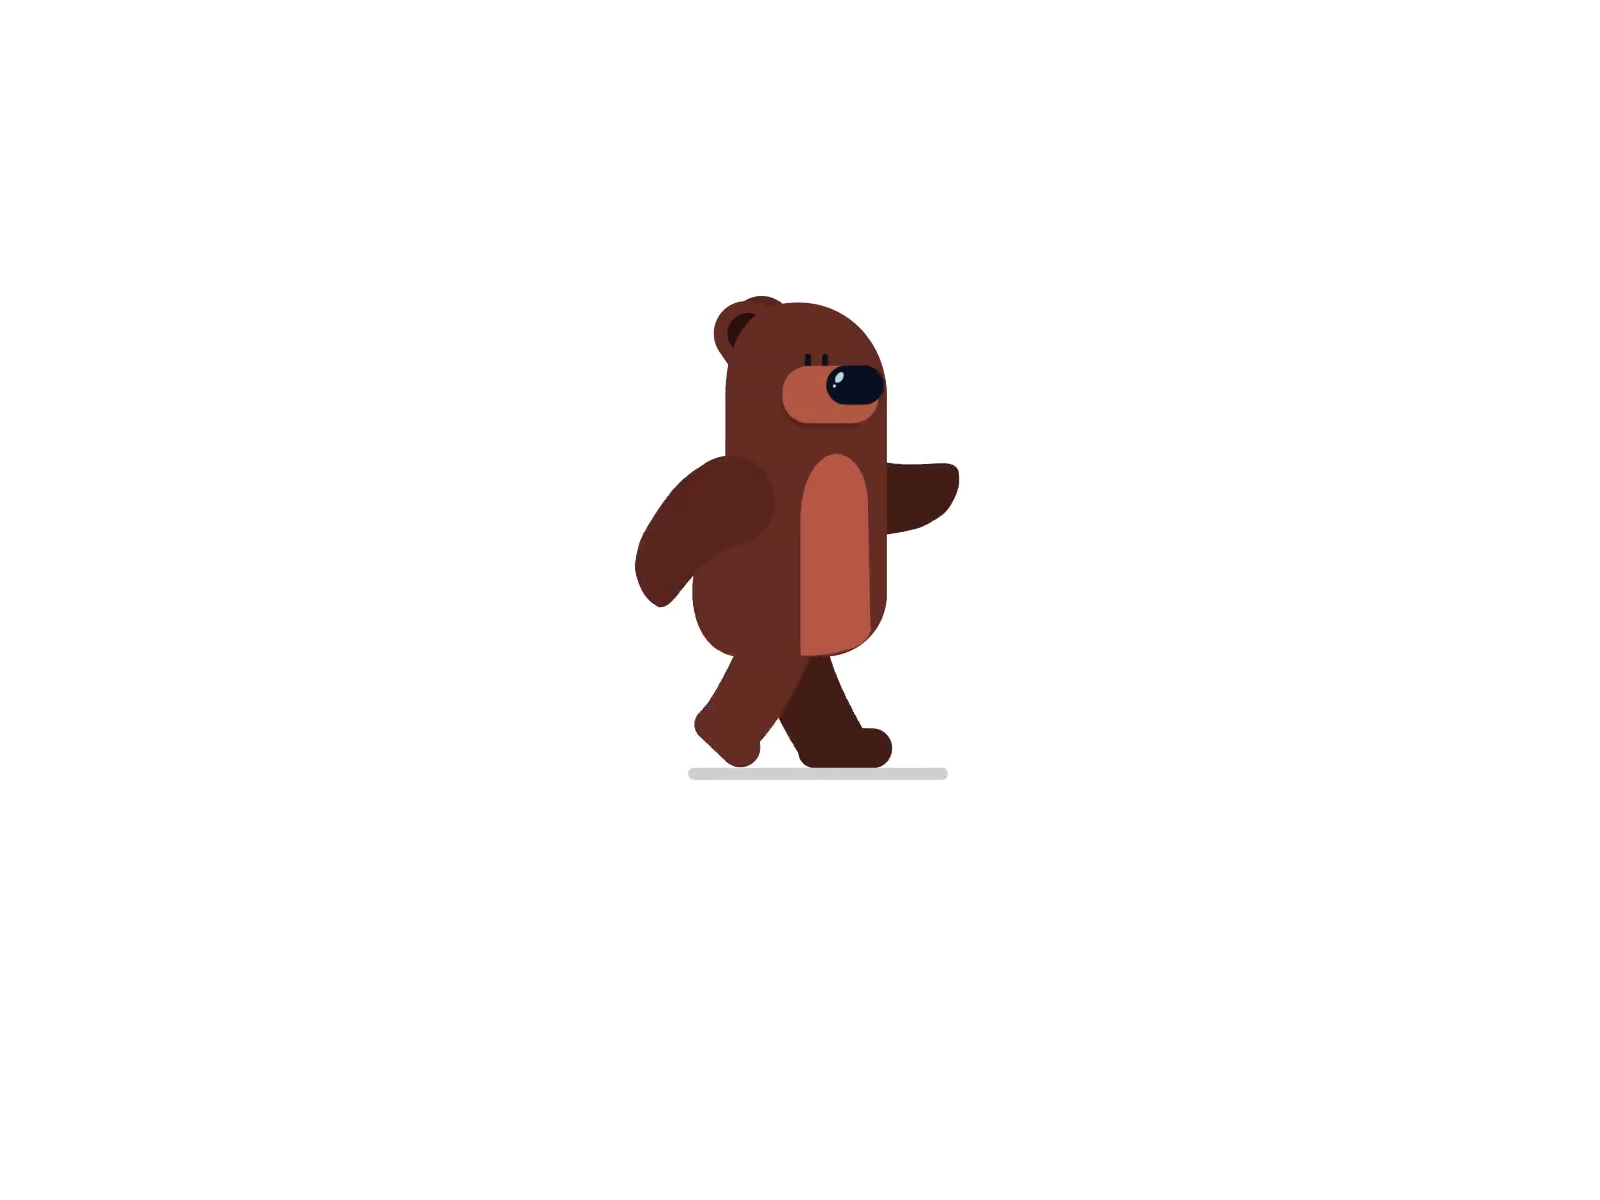 Bear Walk Animation 🐻 by Aroon Philip Mathai on Dribbble